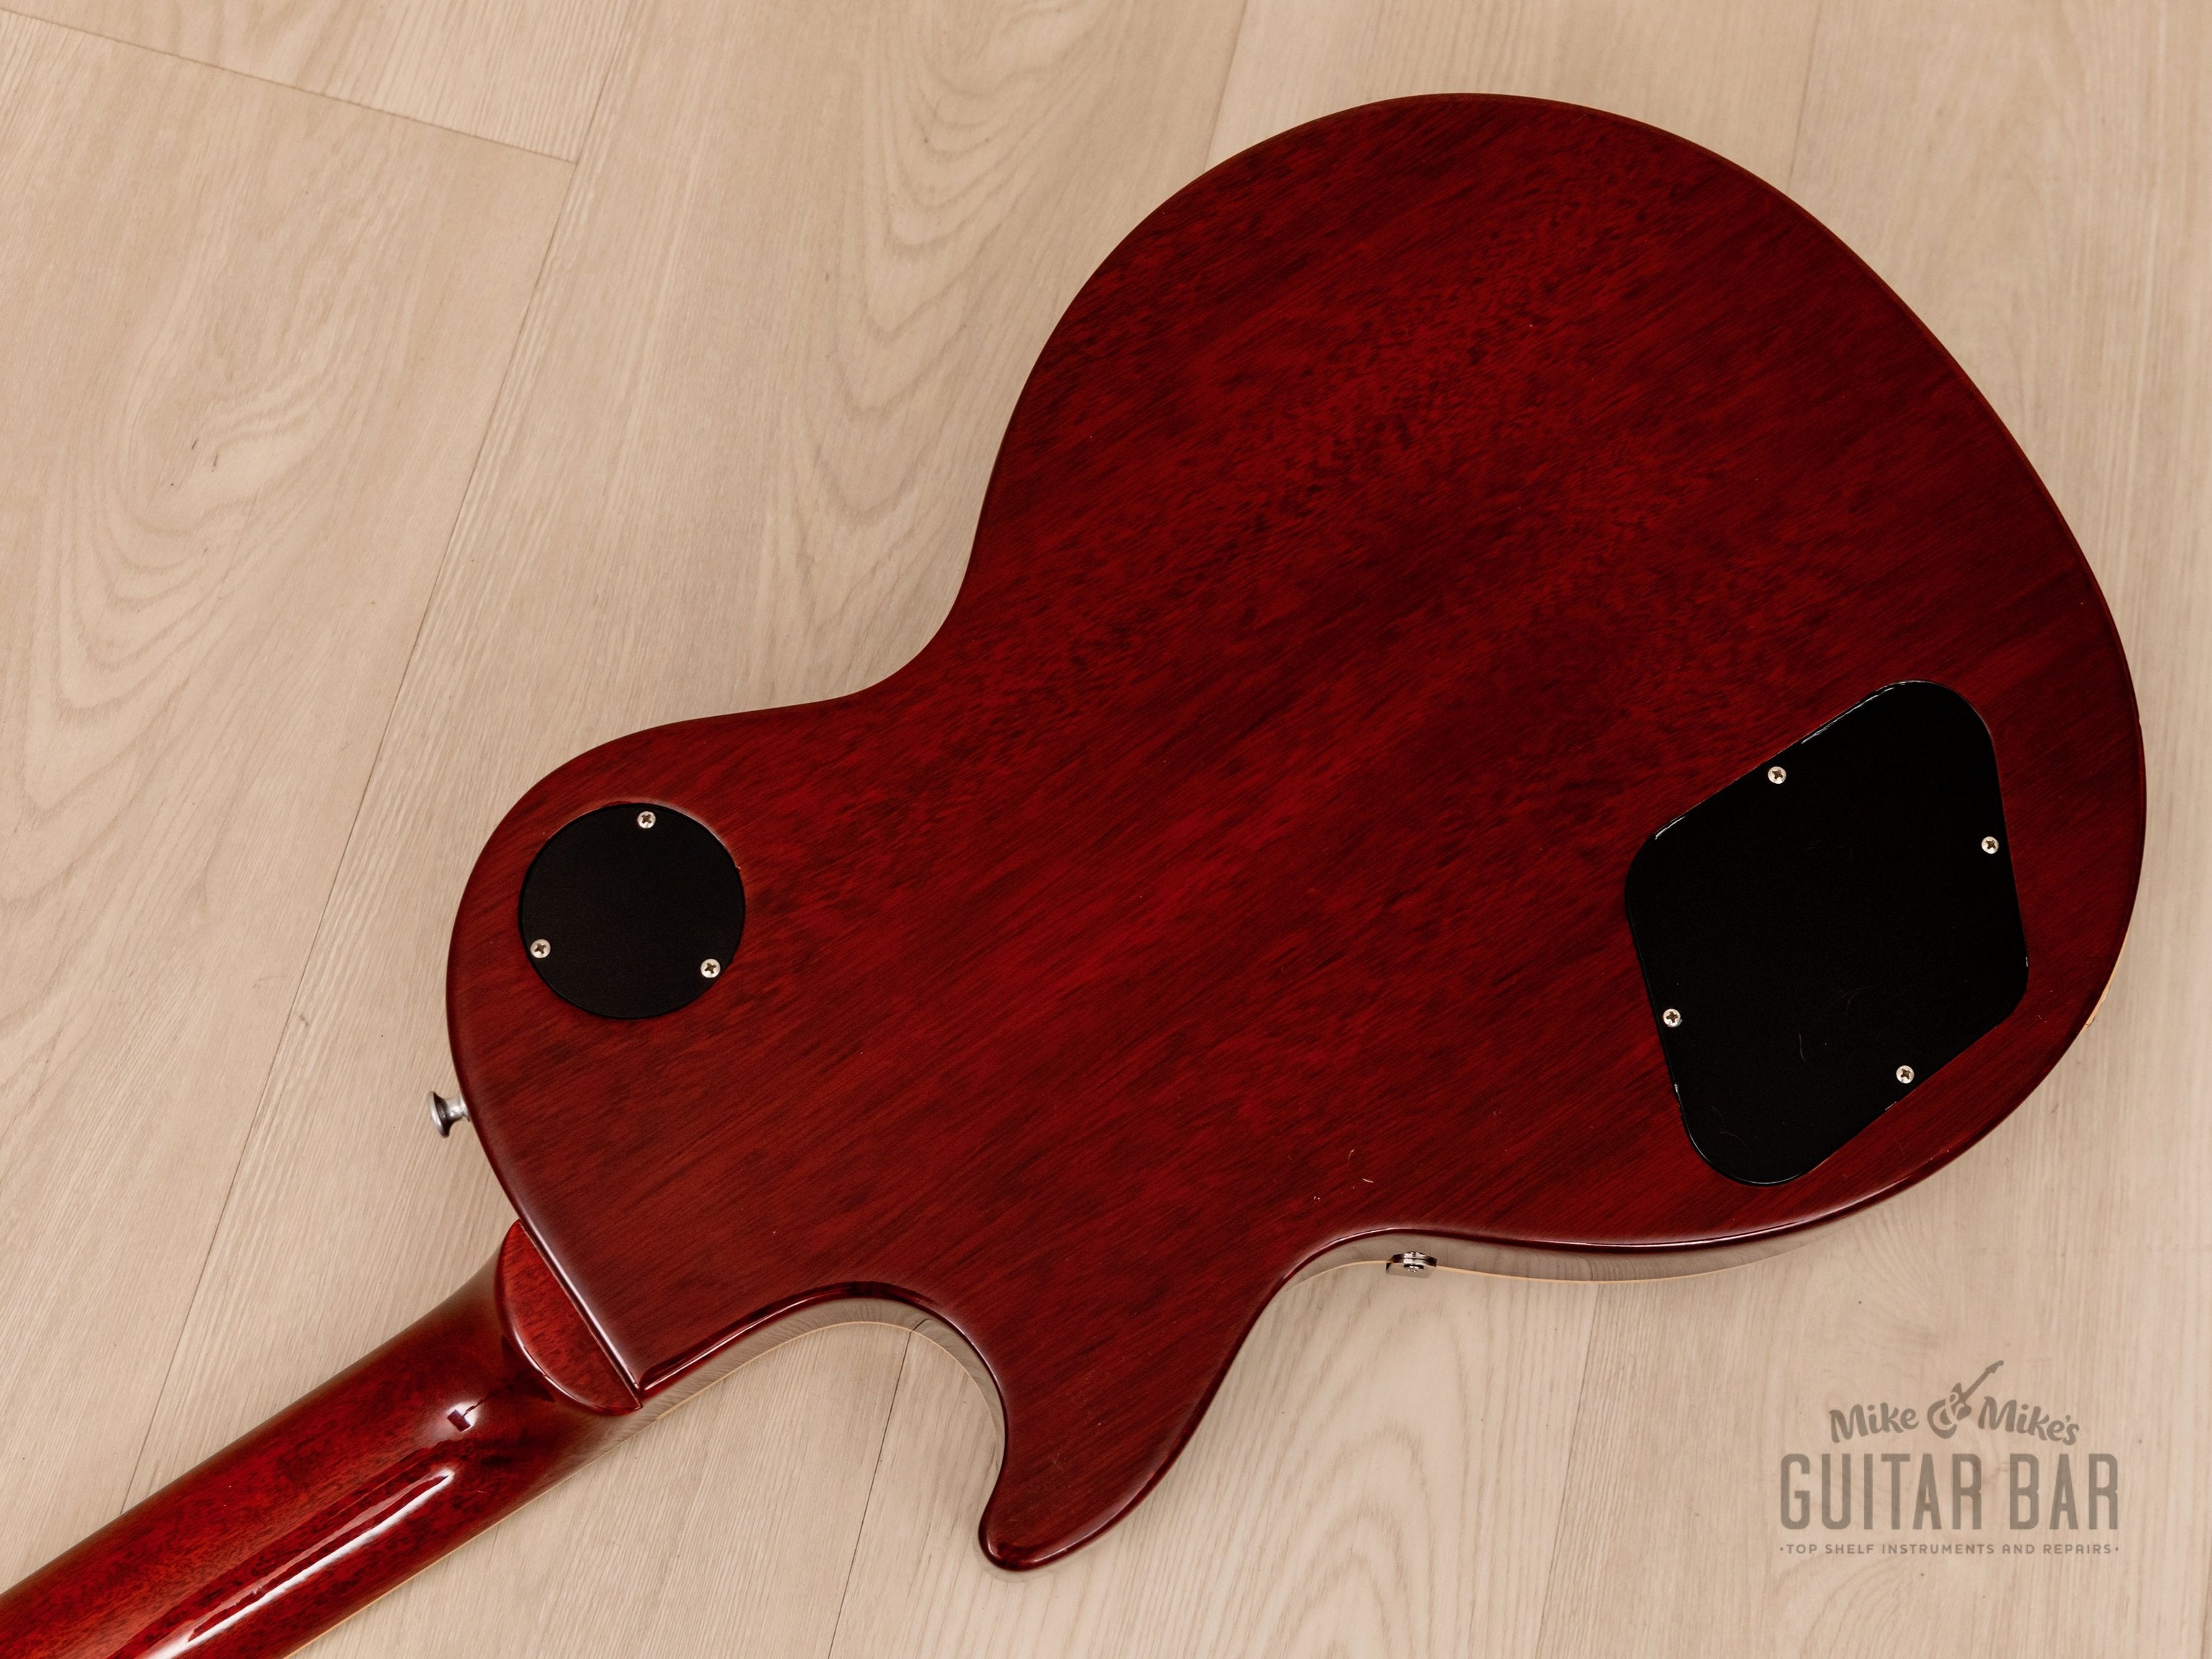 2007 Gibson Les Paul Standard Plus Flame Top Heritage Cherry Sunburst w/ Burstbucker PAFs, Case, Tags